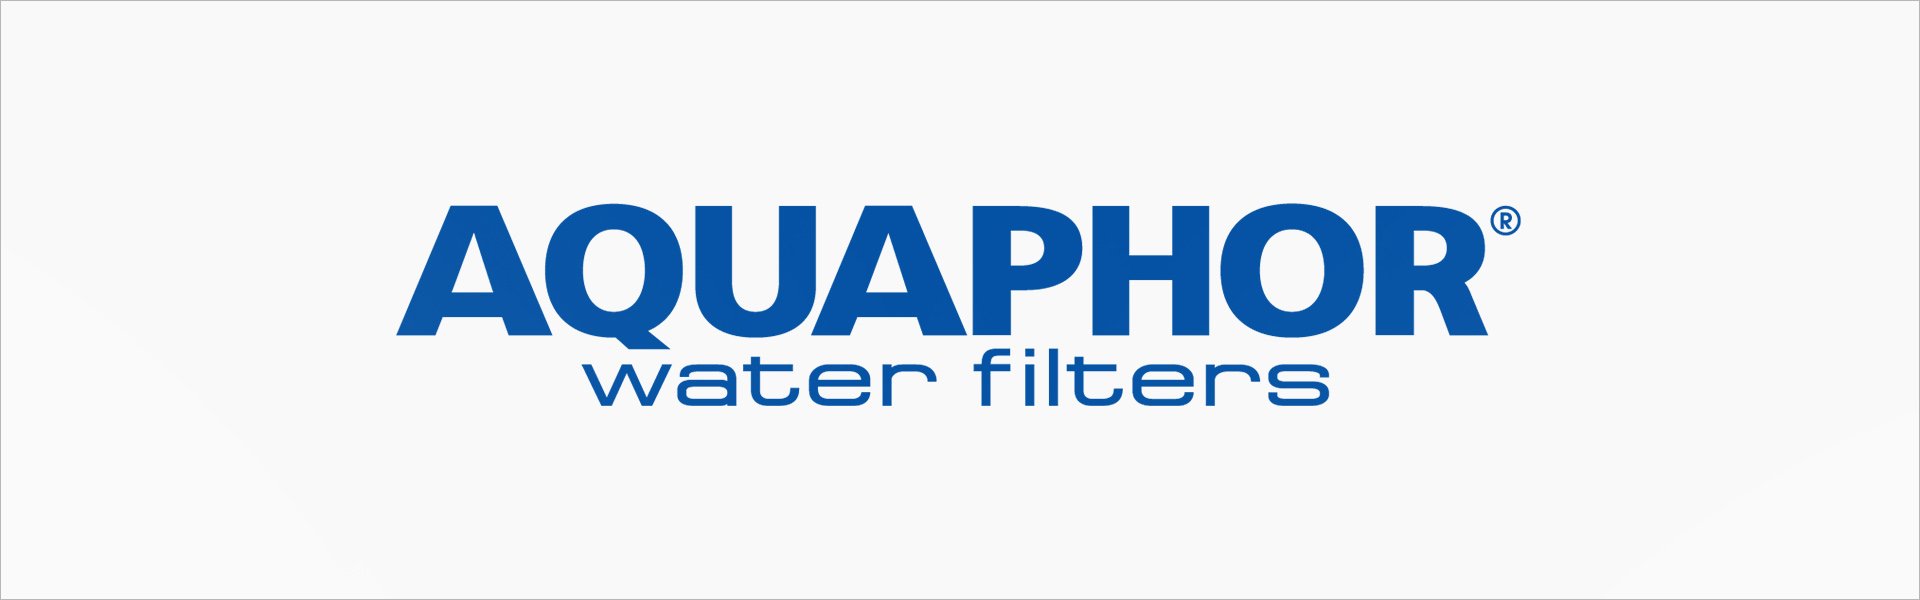 Aquaphor Provence 4.2 Aquaphor